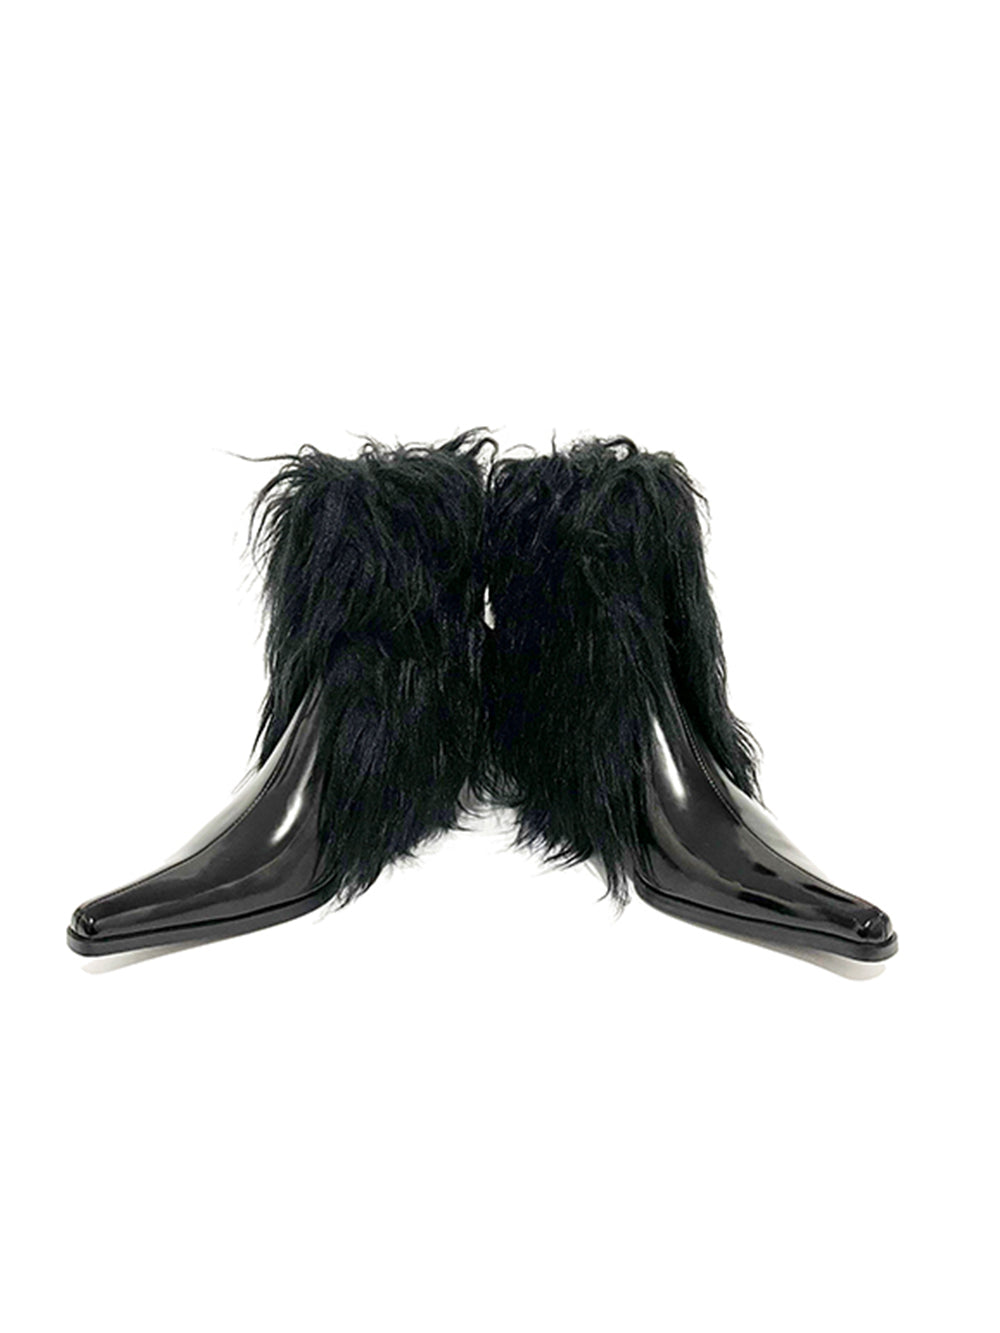 MUKTANK×AZ43 Black Wig Feel Ankle Boots Comfortable Shoes